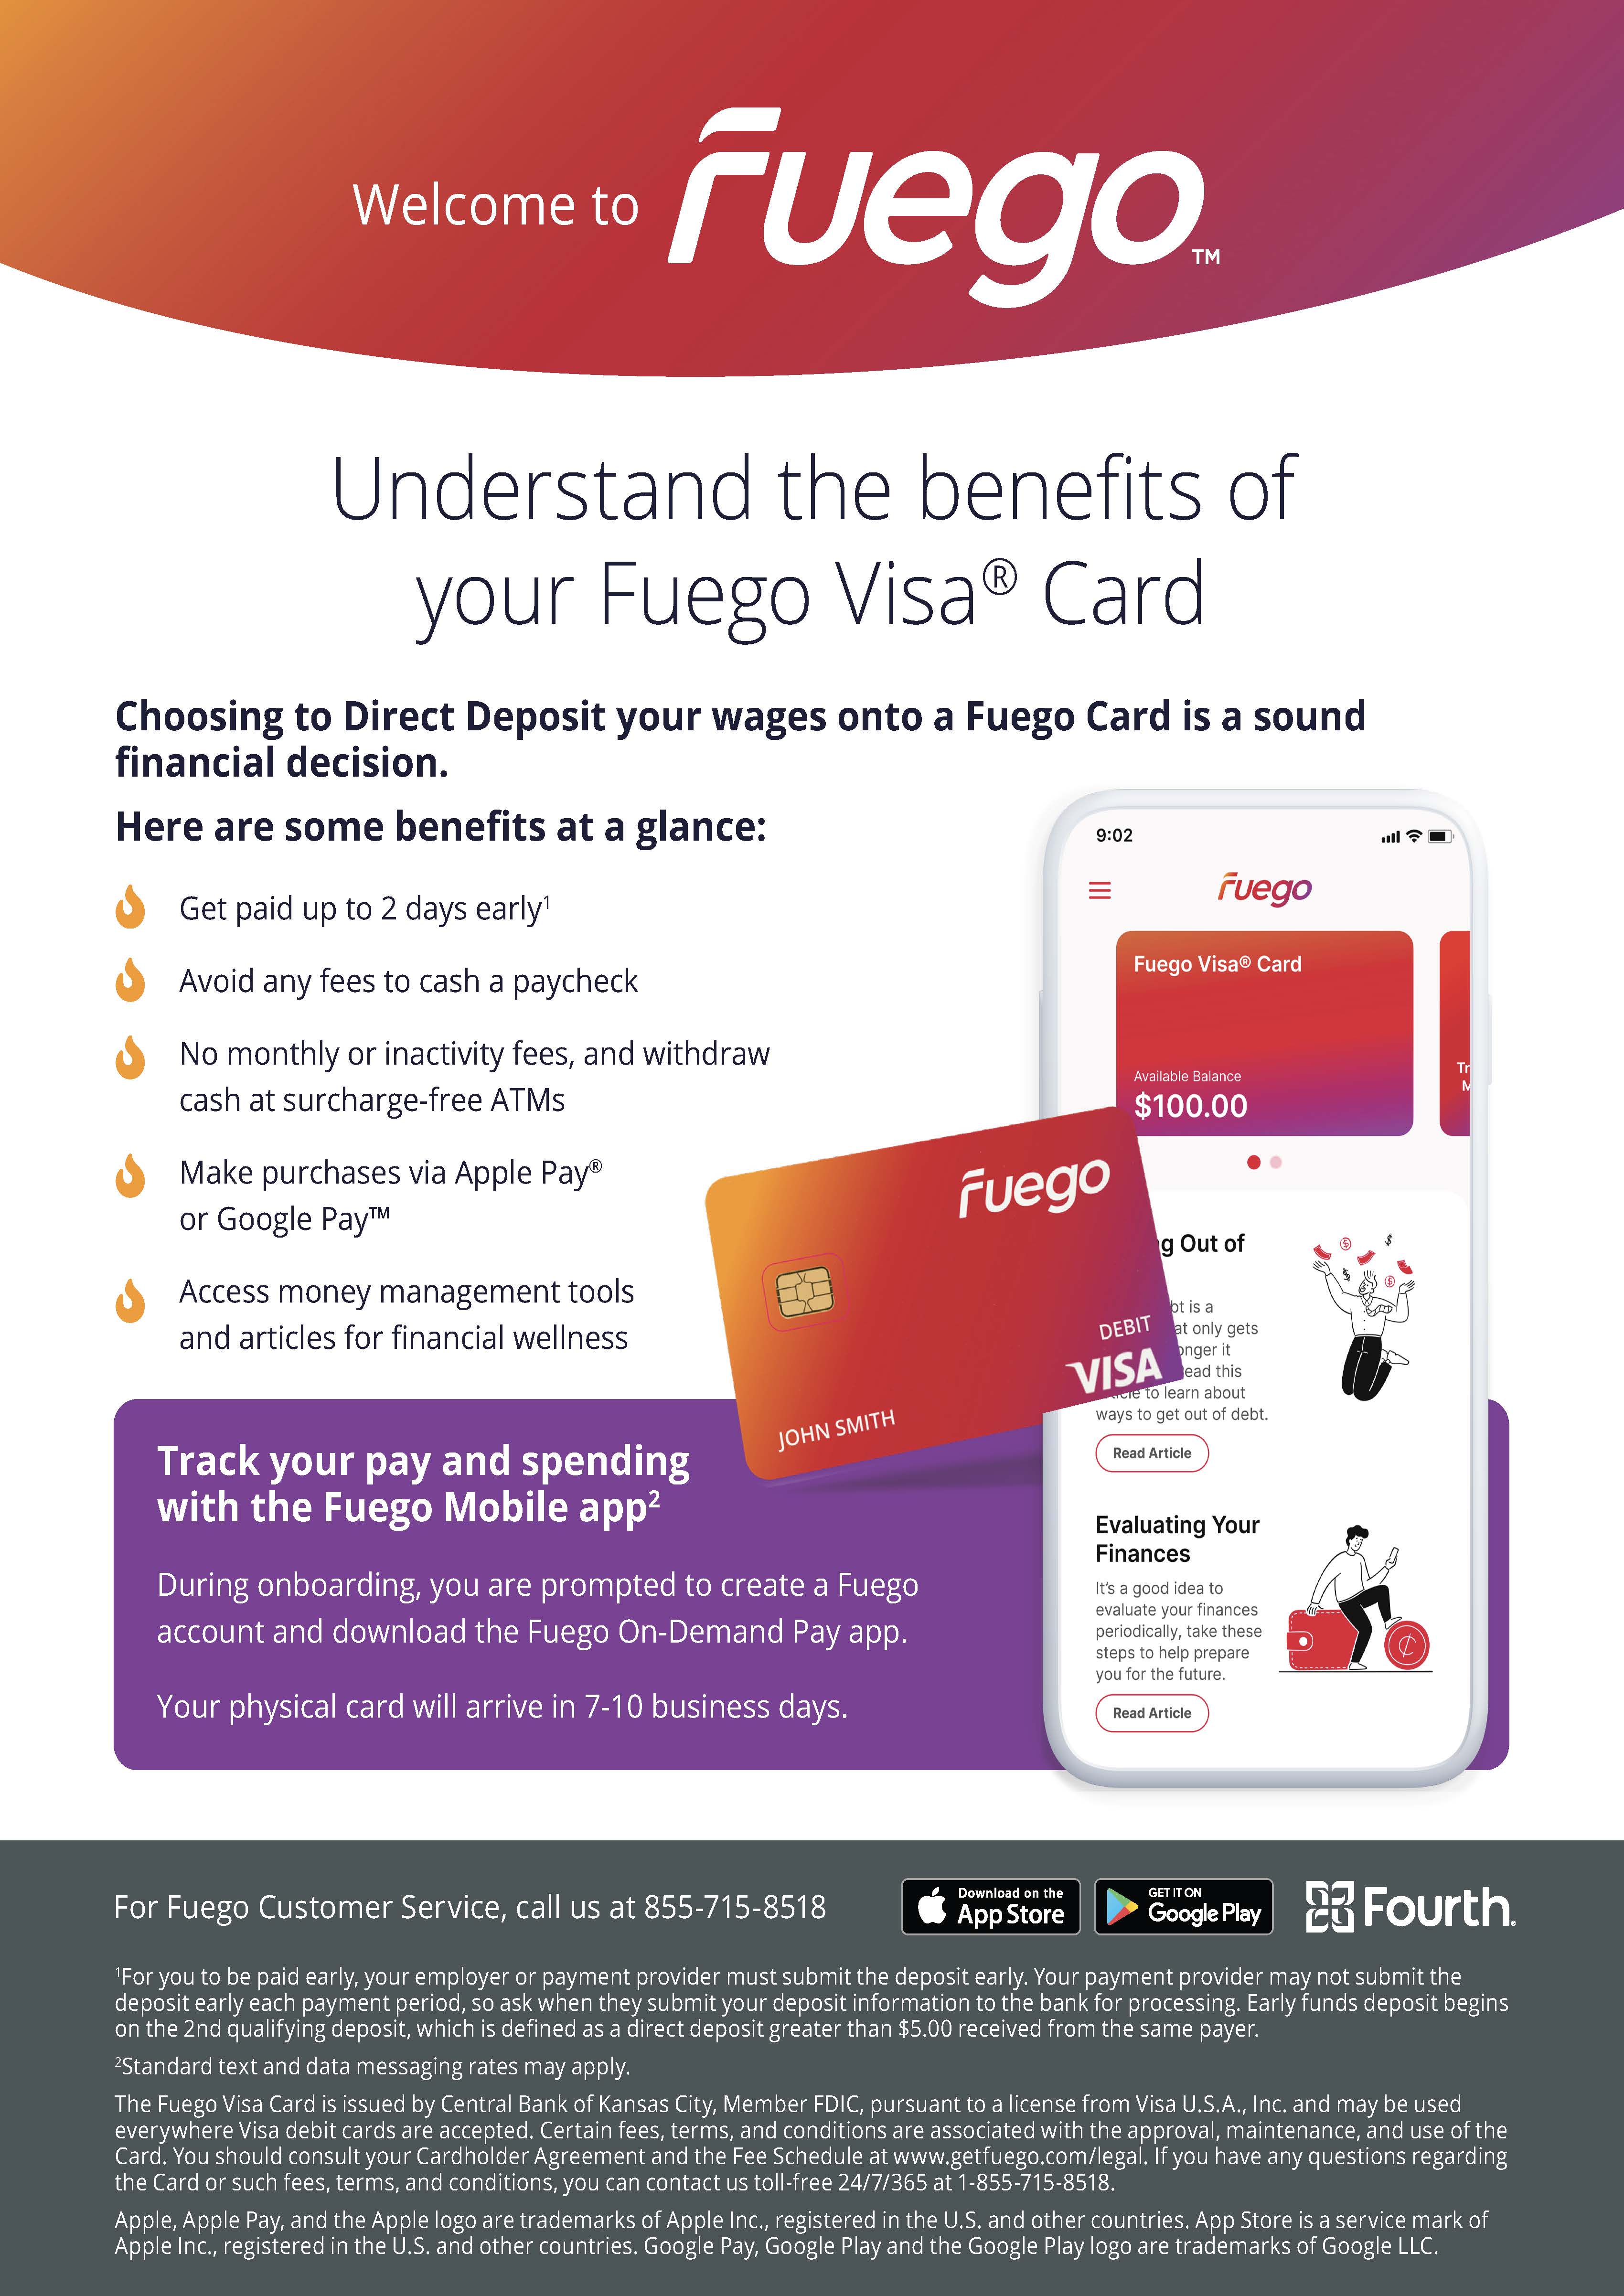 Employee_Flyer___Understand_the_benefits_of_the_Fuego_Visa___Card.jpg